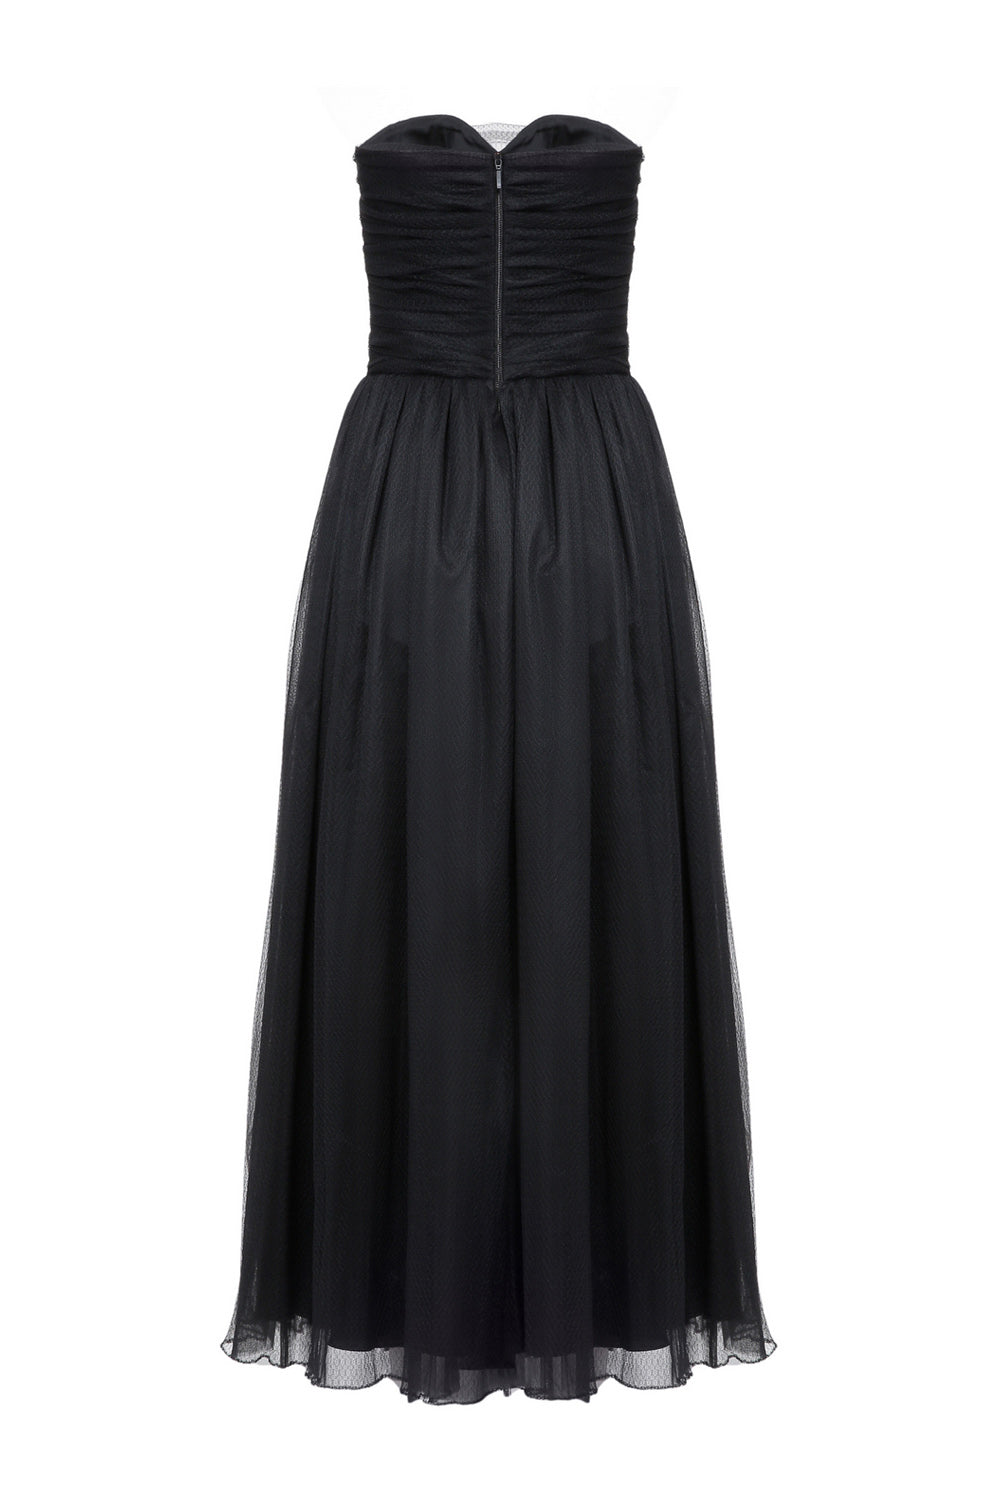 Suzi Tulle Black Corset Dress